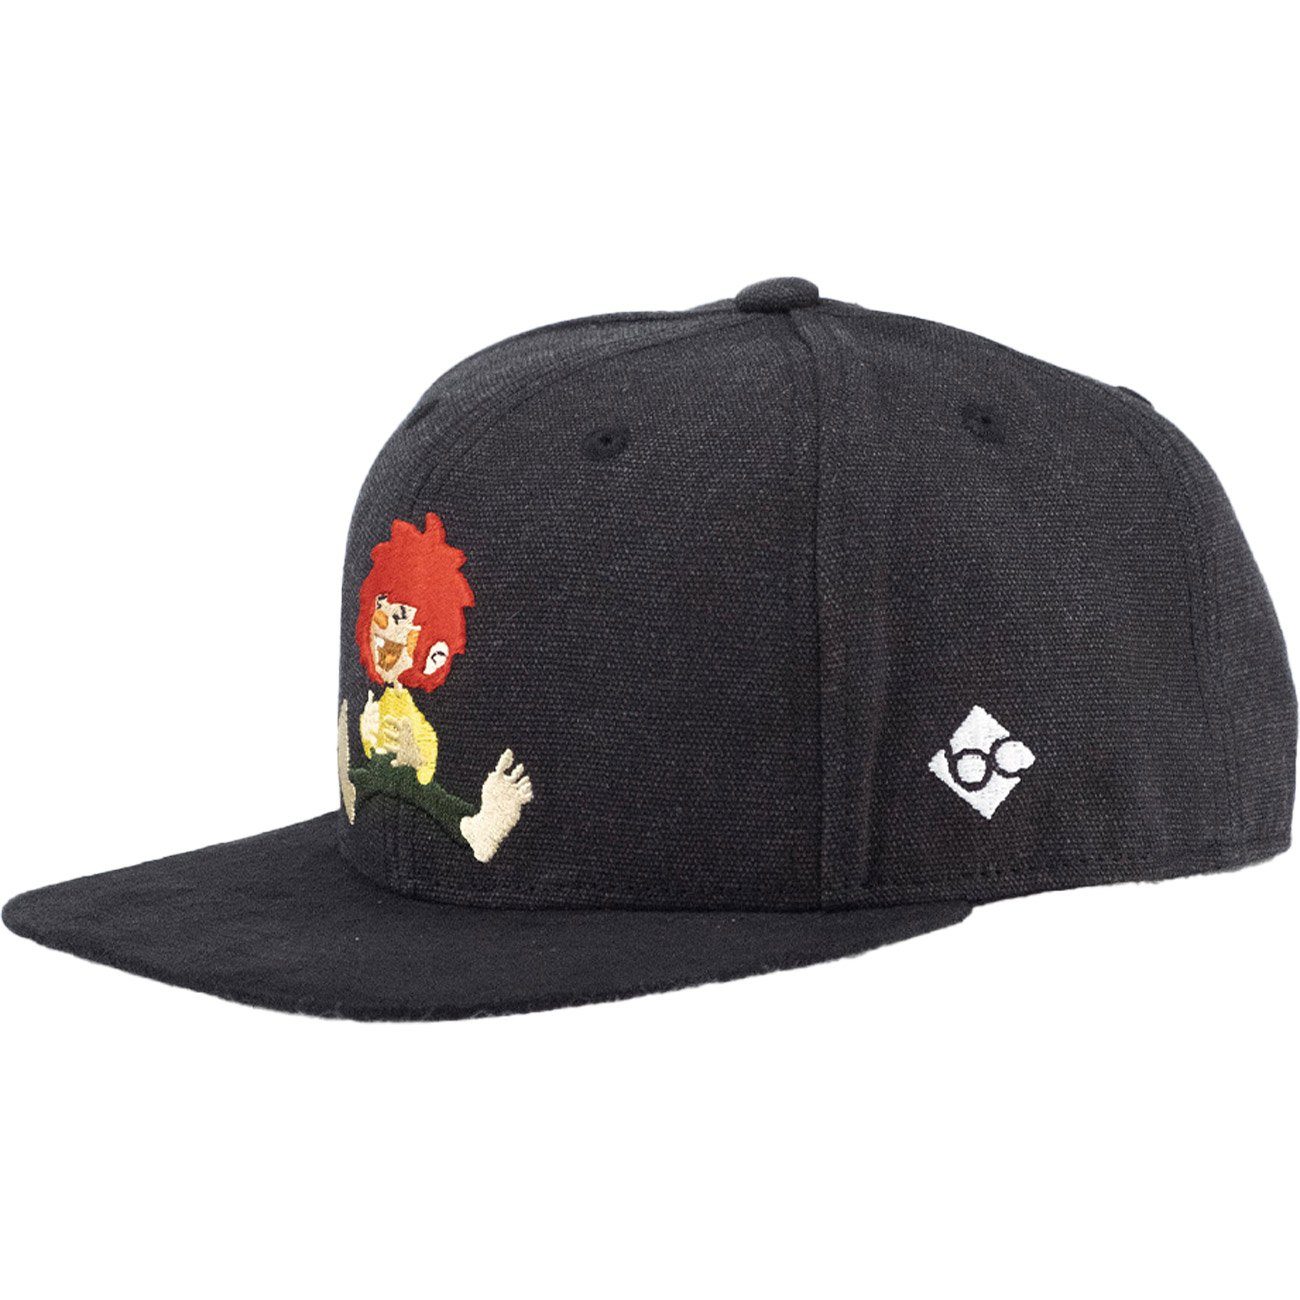 Bavarian Baseball Pumuckl Caps Cap